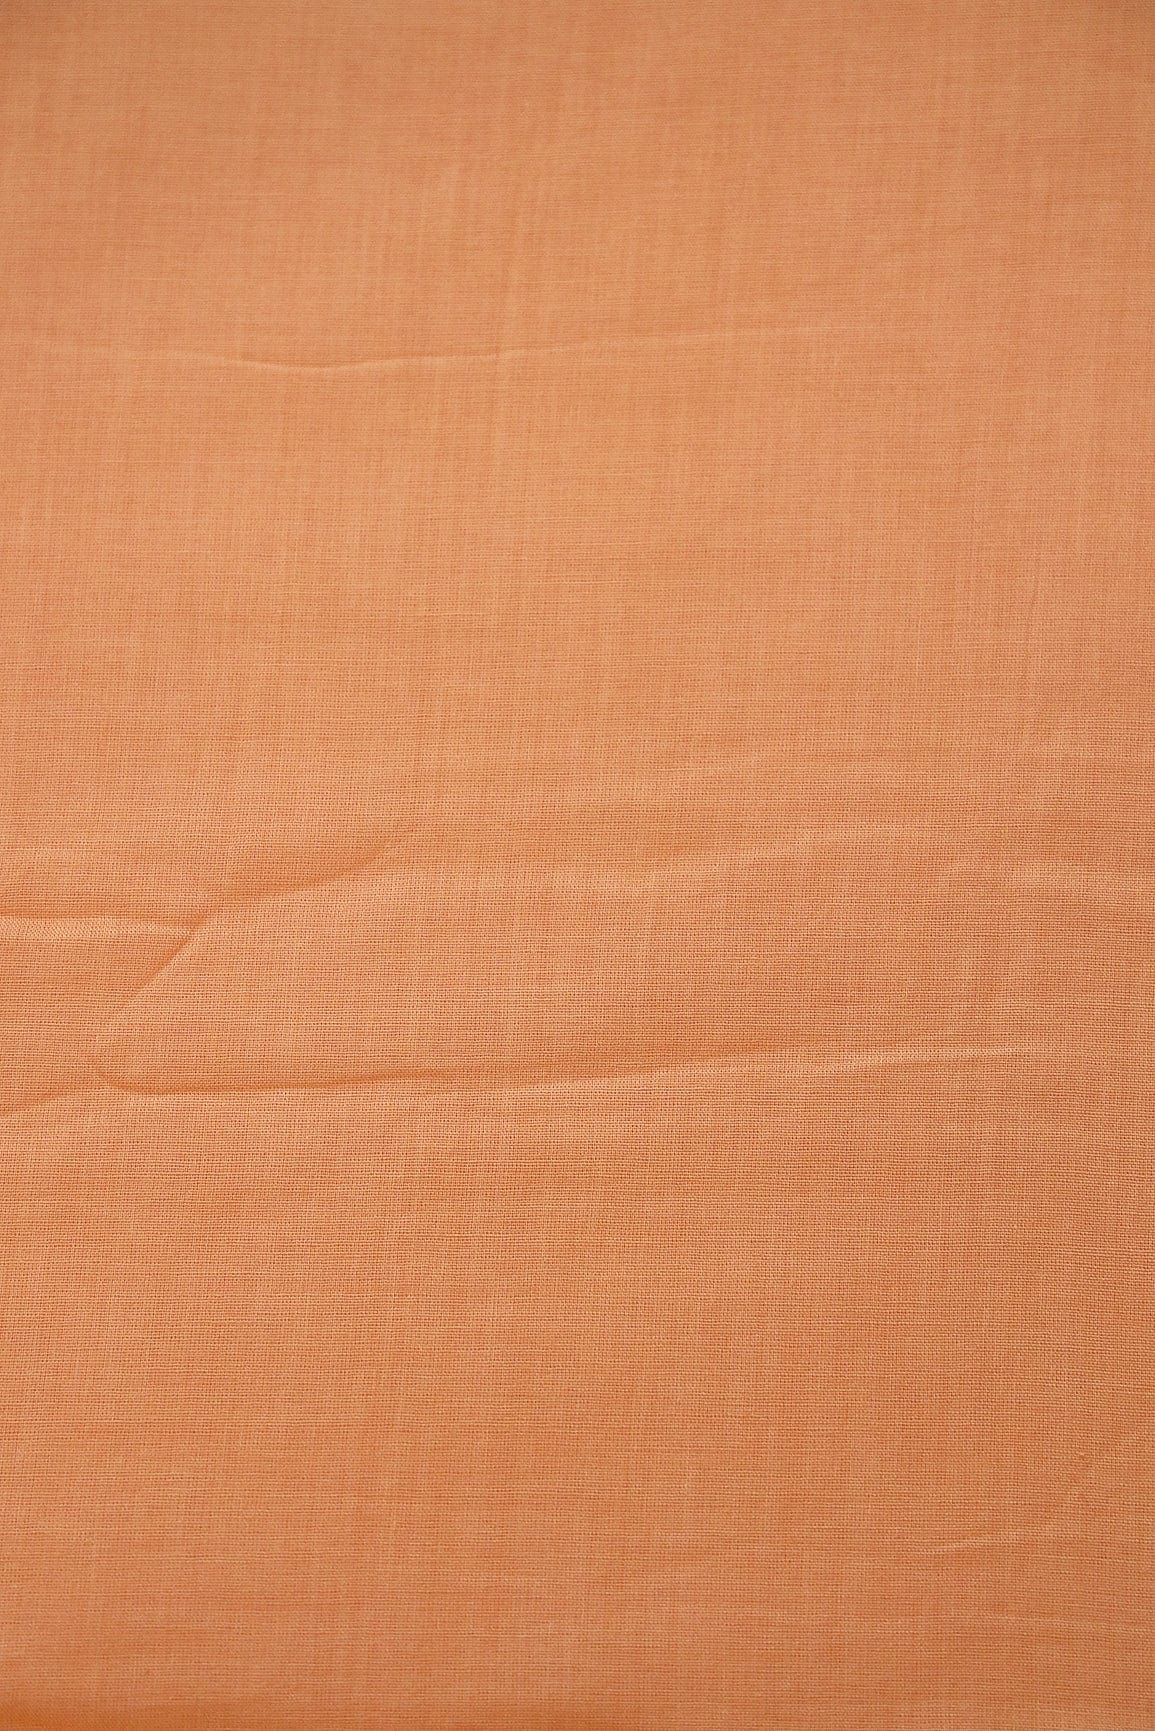 doeraa Plain Dyed Fabrics Peach Lawn Cotton Fabric